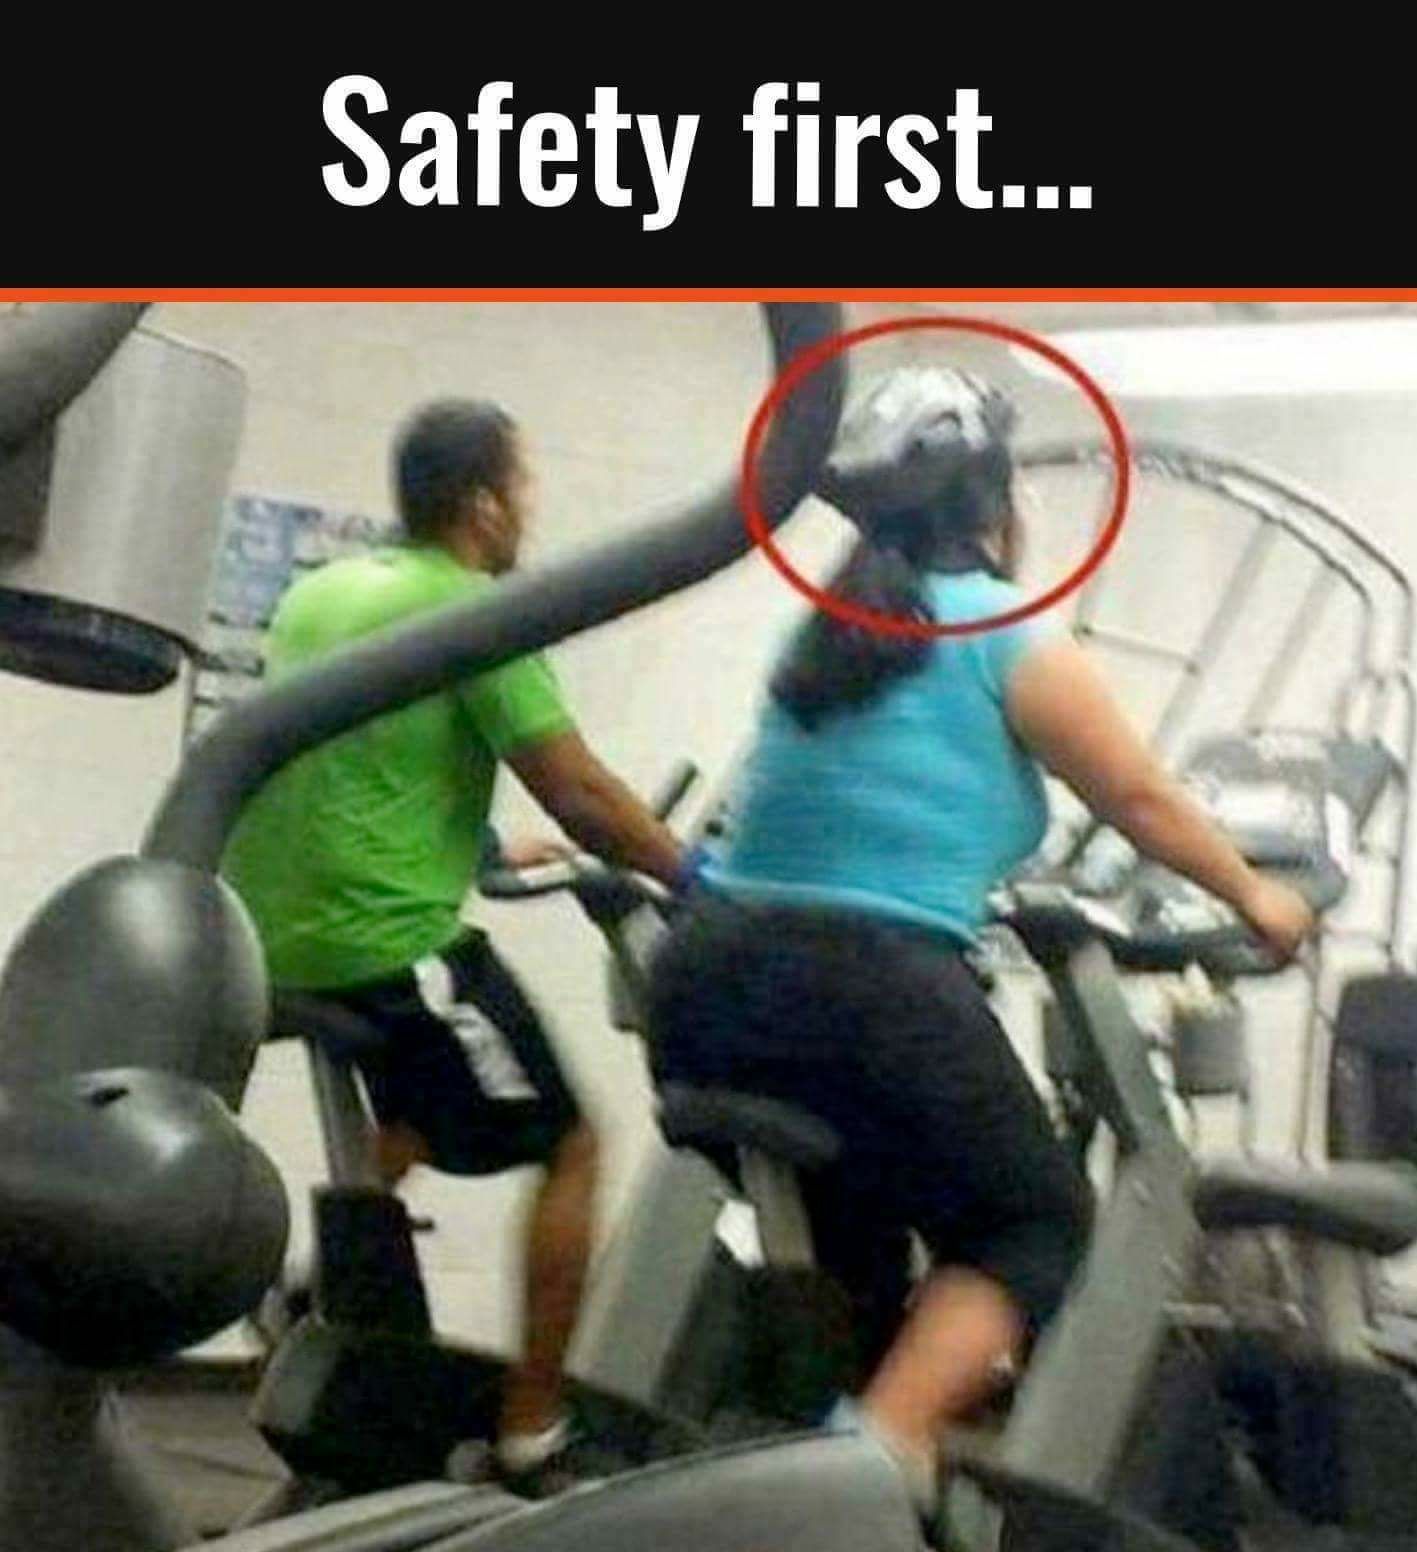 meme stream - safety first meme - Safety first...